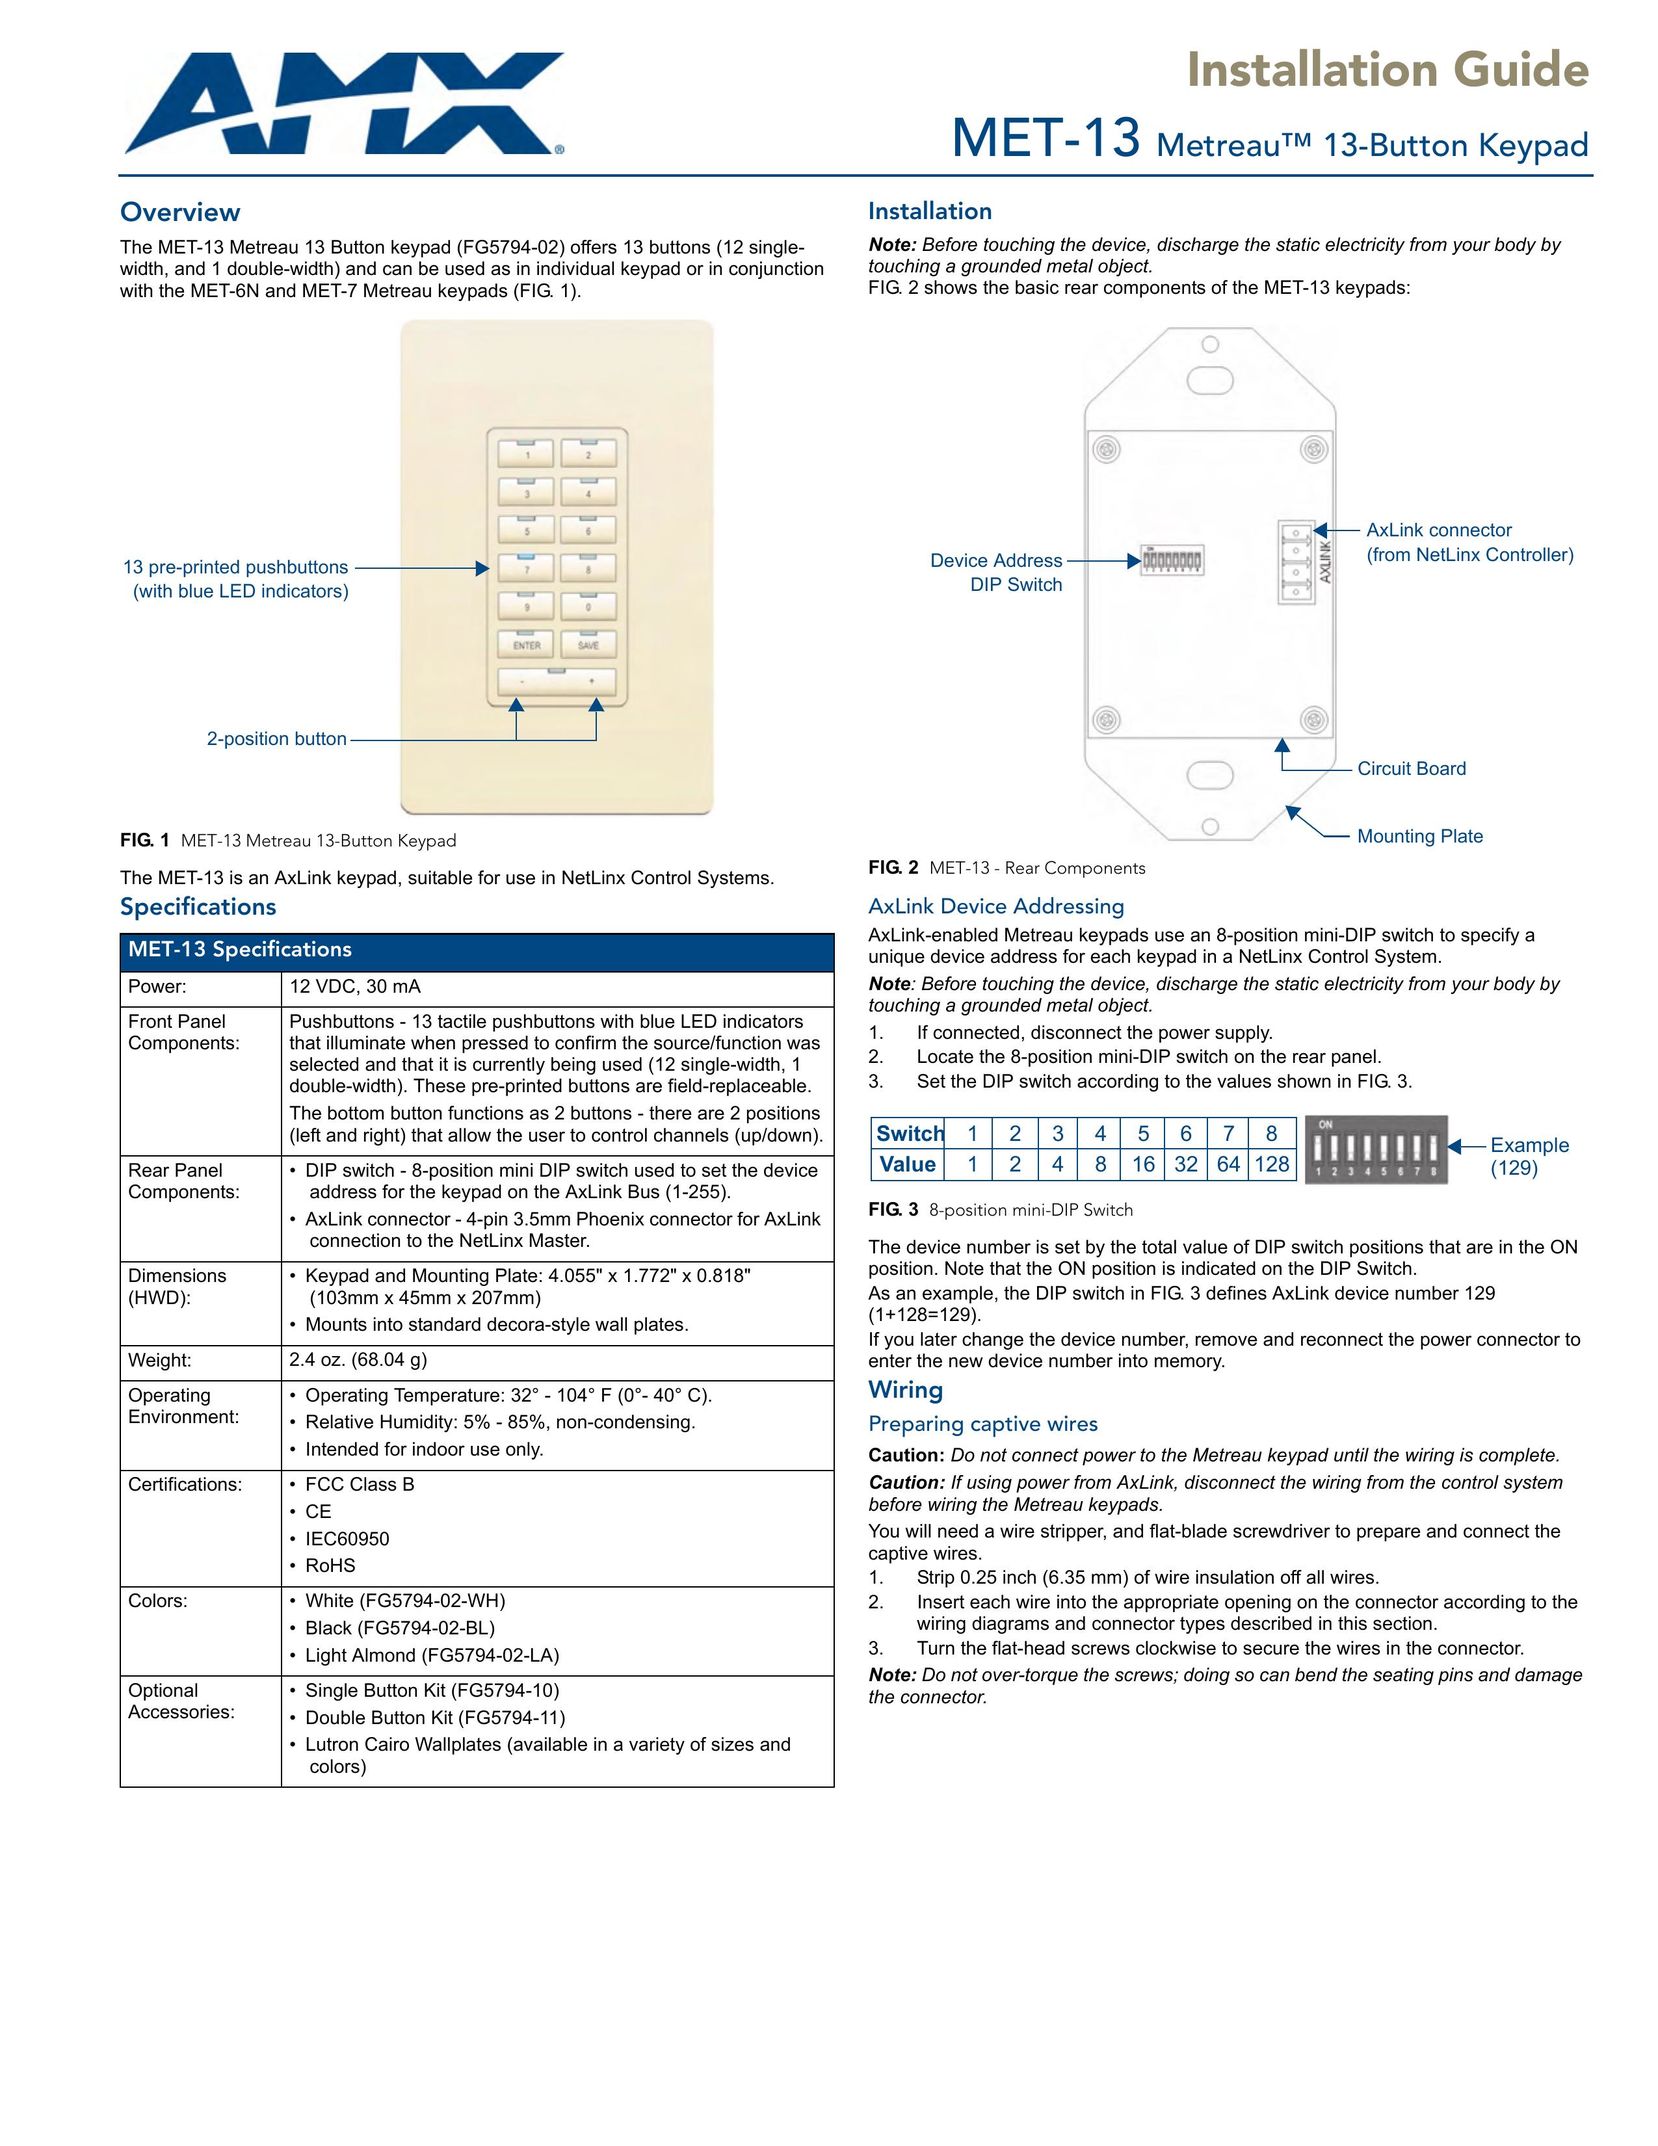 AMX MET-13 Network Card User Manual